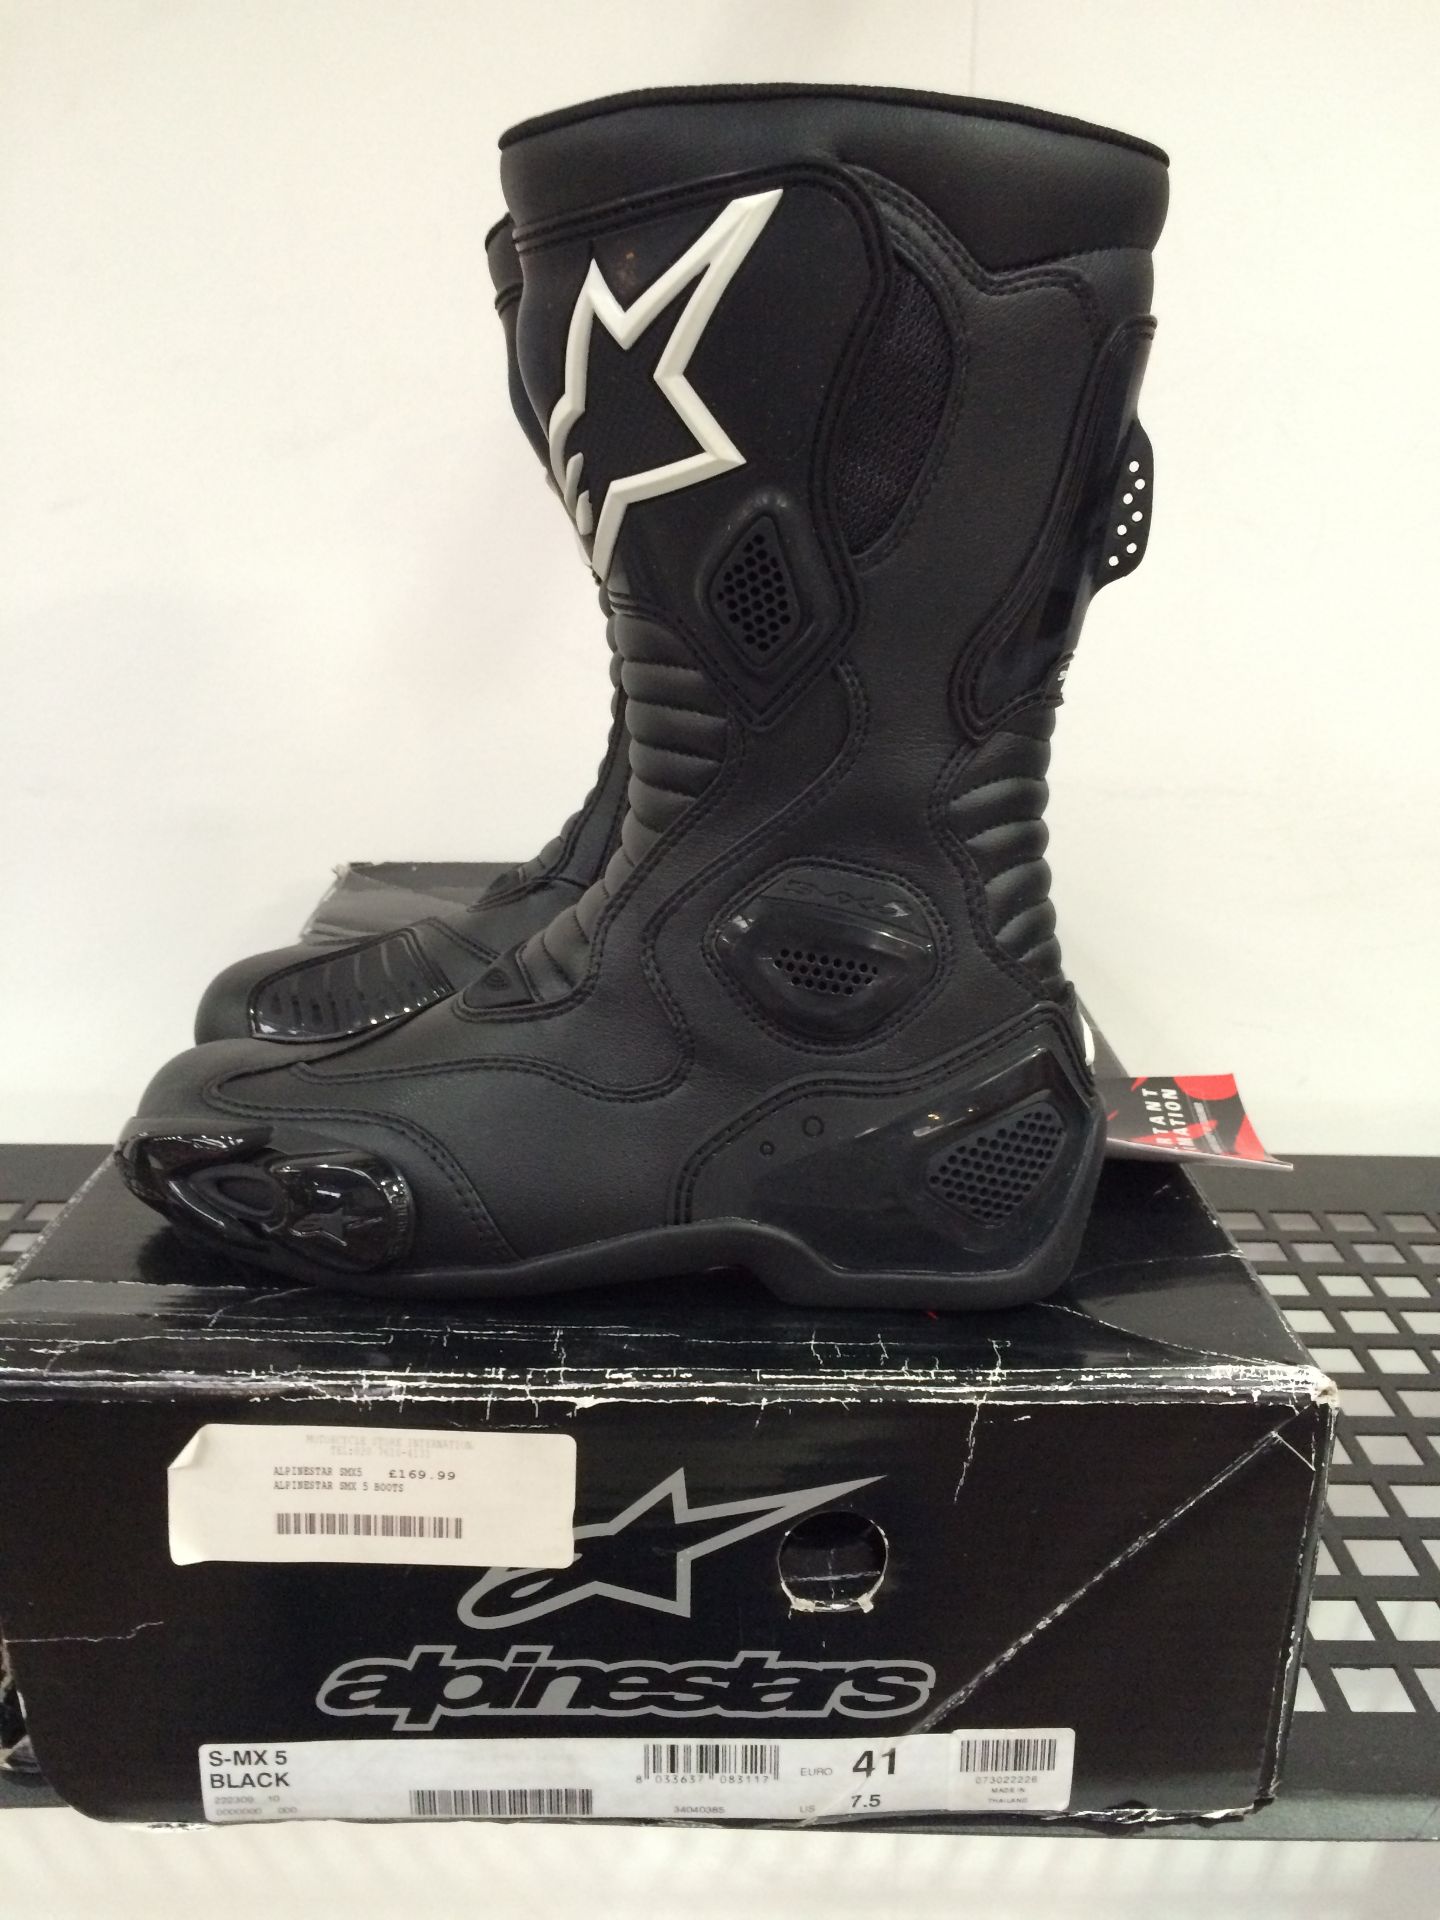 Alpinestars SMX 5 Black boots. Size US 7.5 (41)